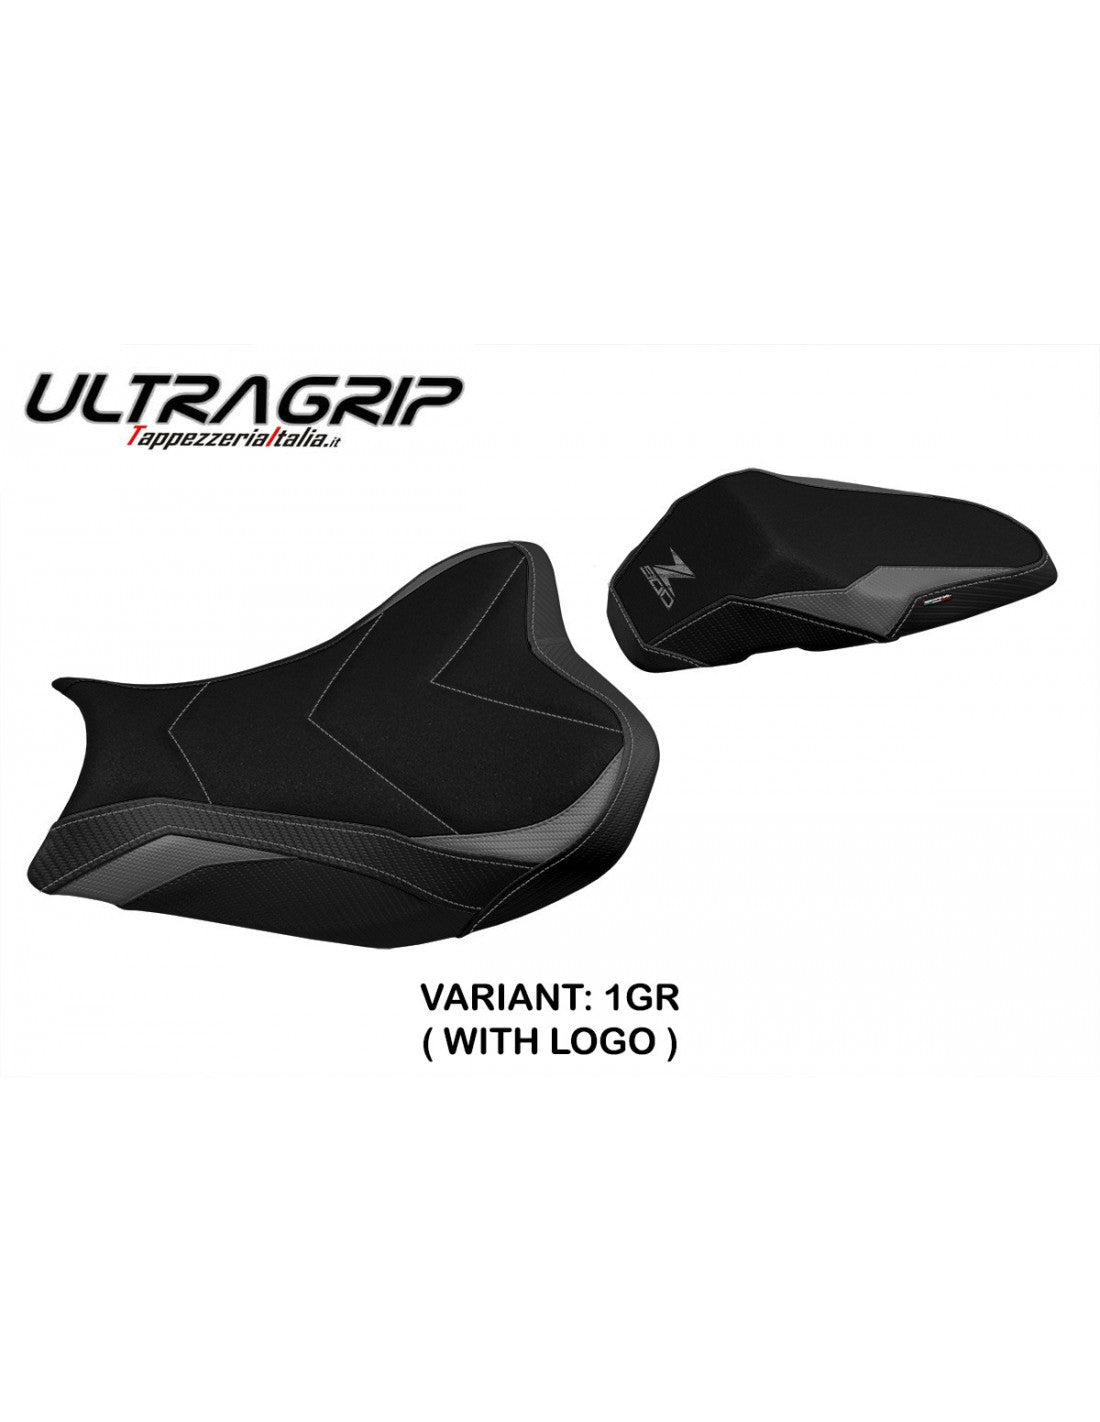 Tappezzeria Shara 1 Ultragrip Seat Cover for Kawasaki Z900